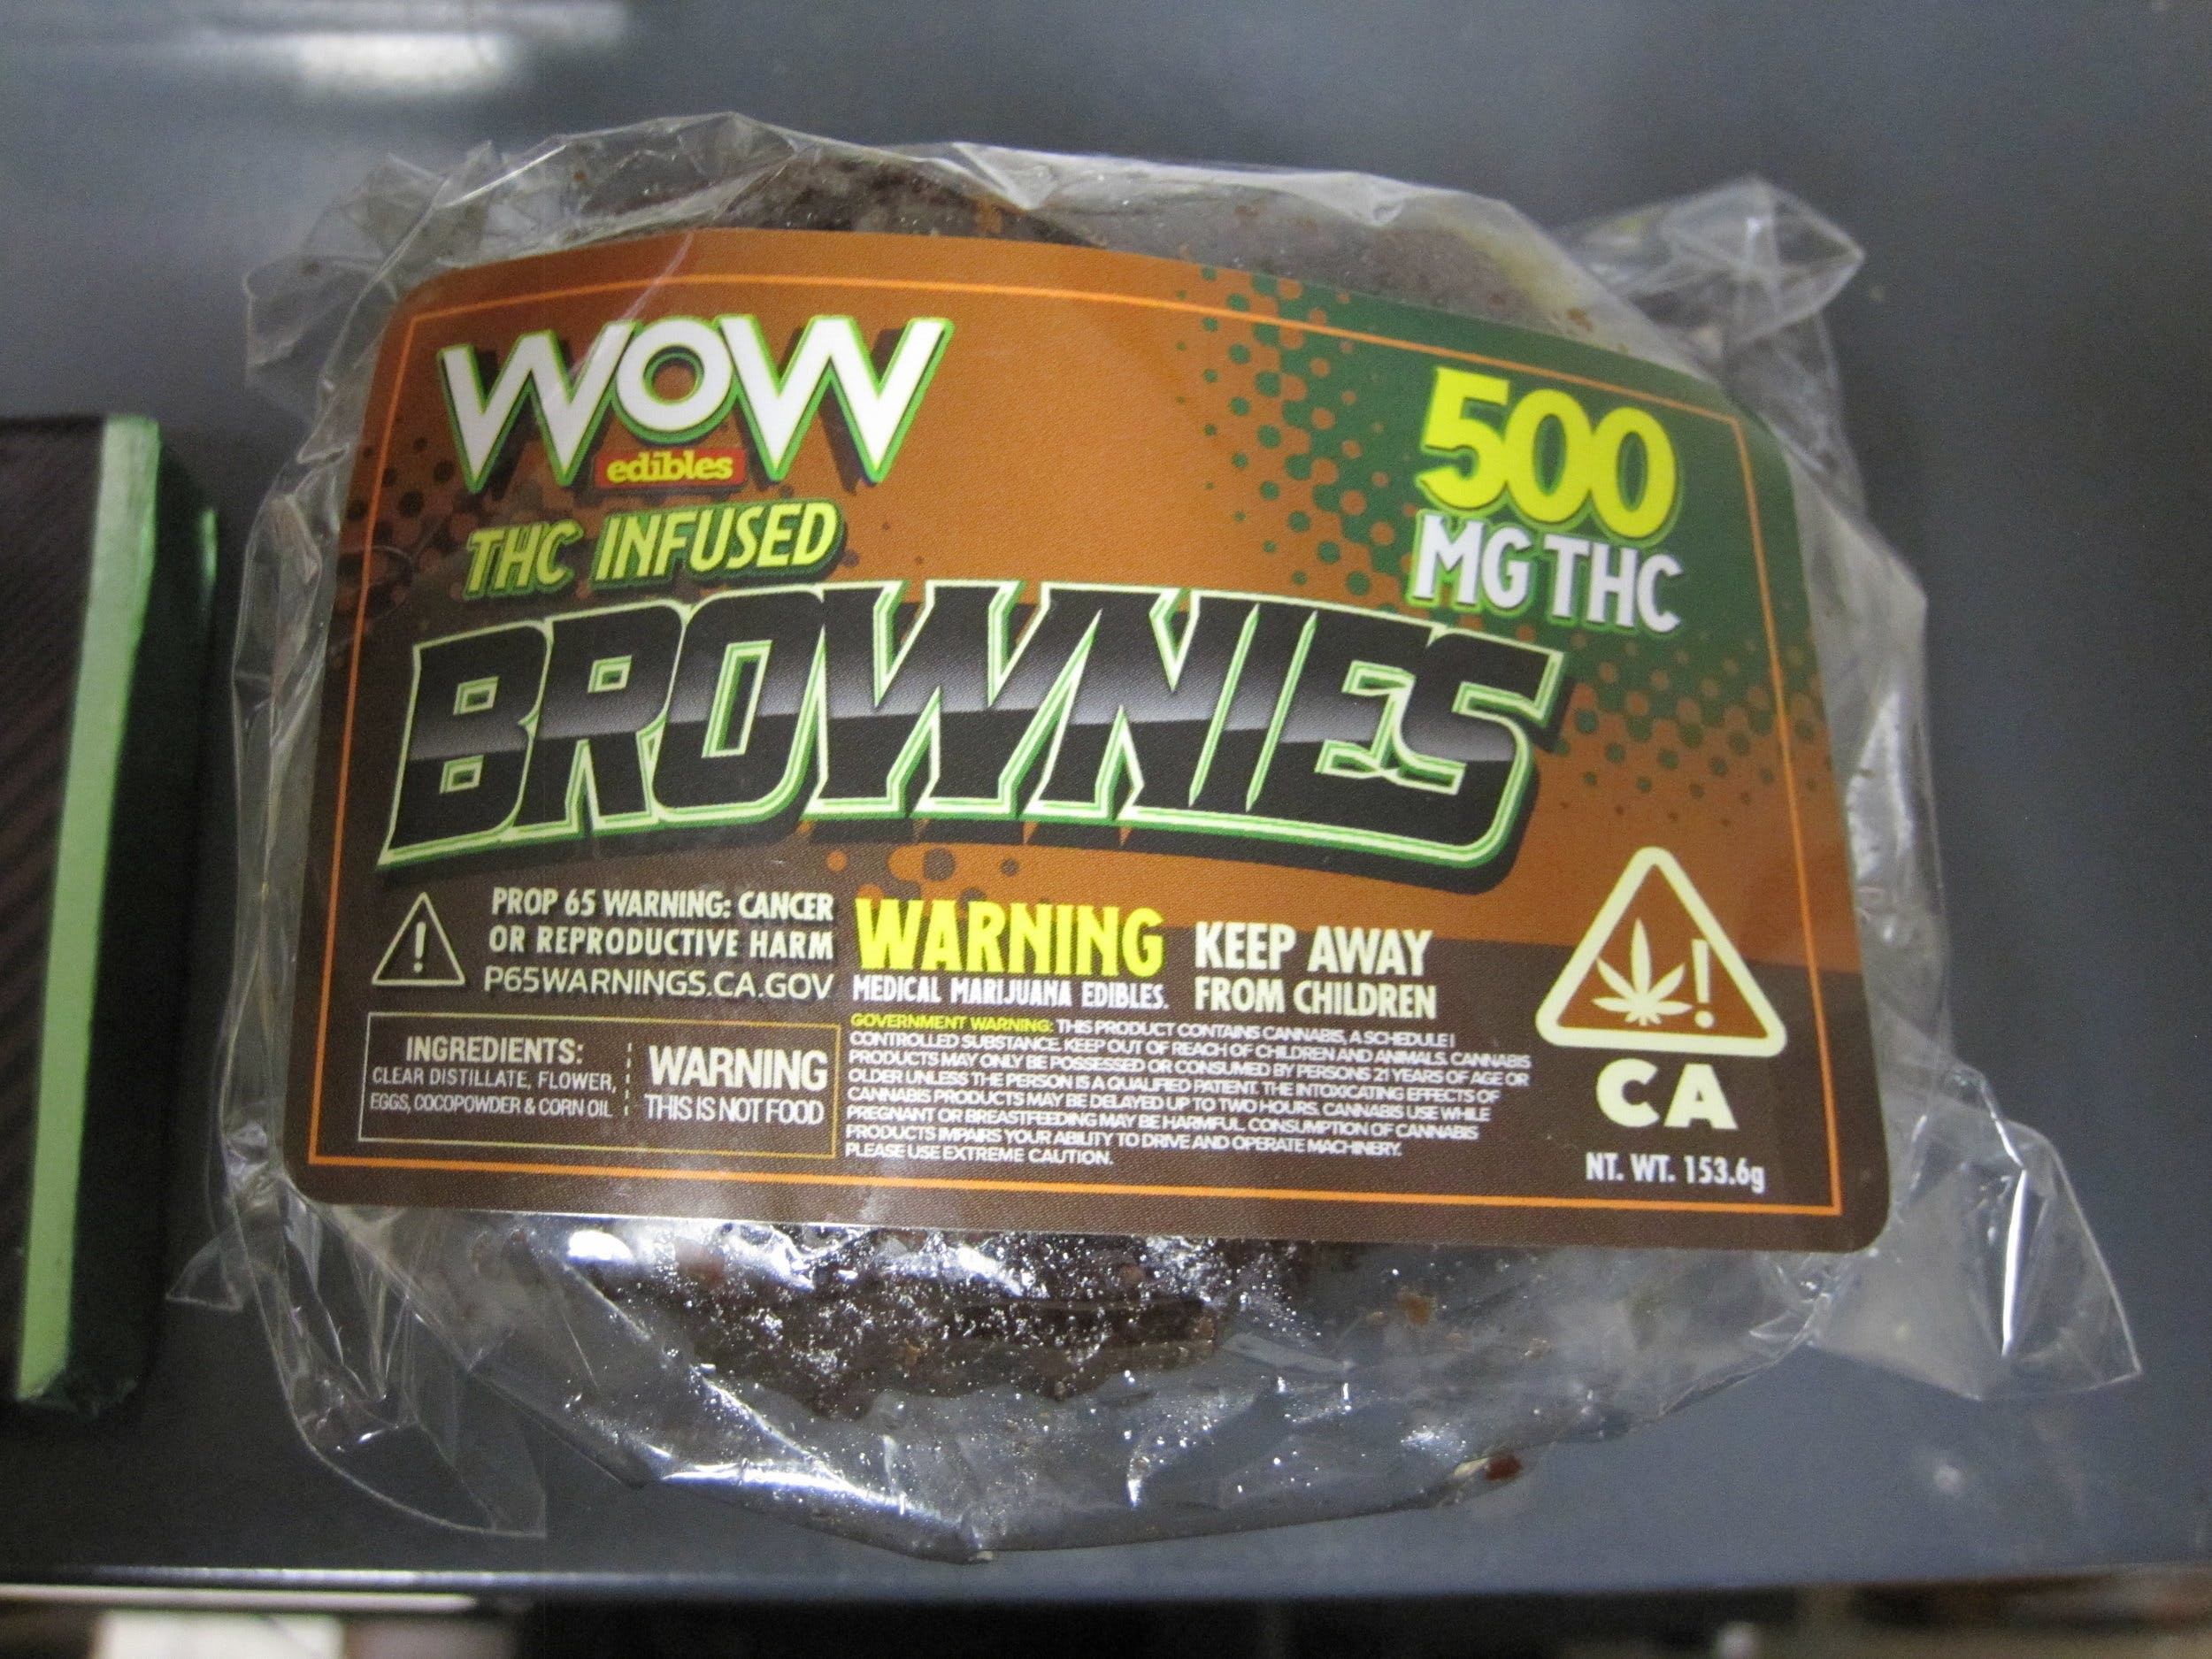 edible-wow-edible-brownie-500mg